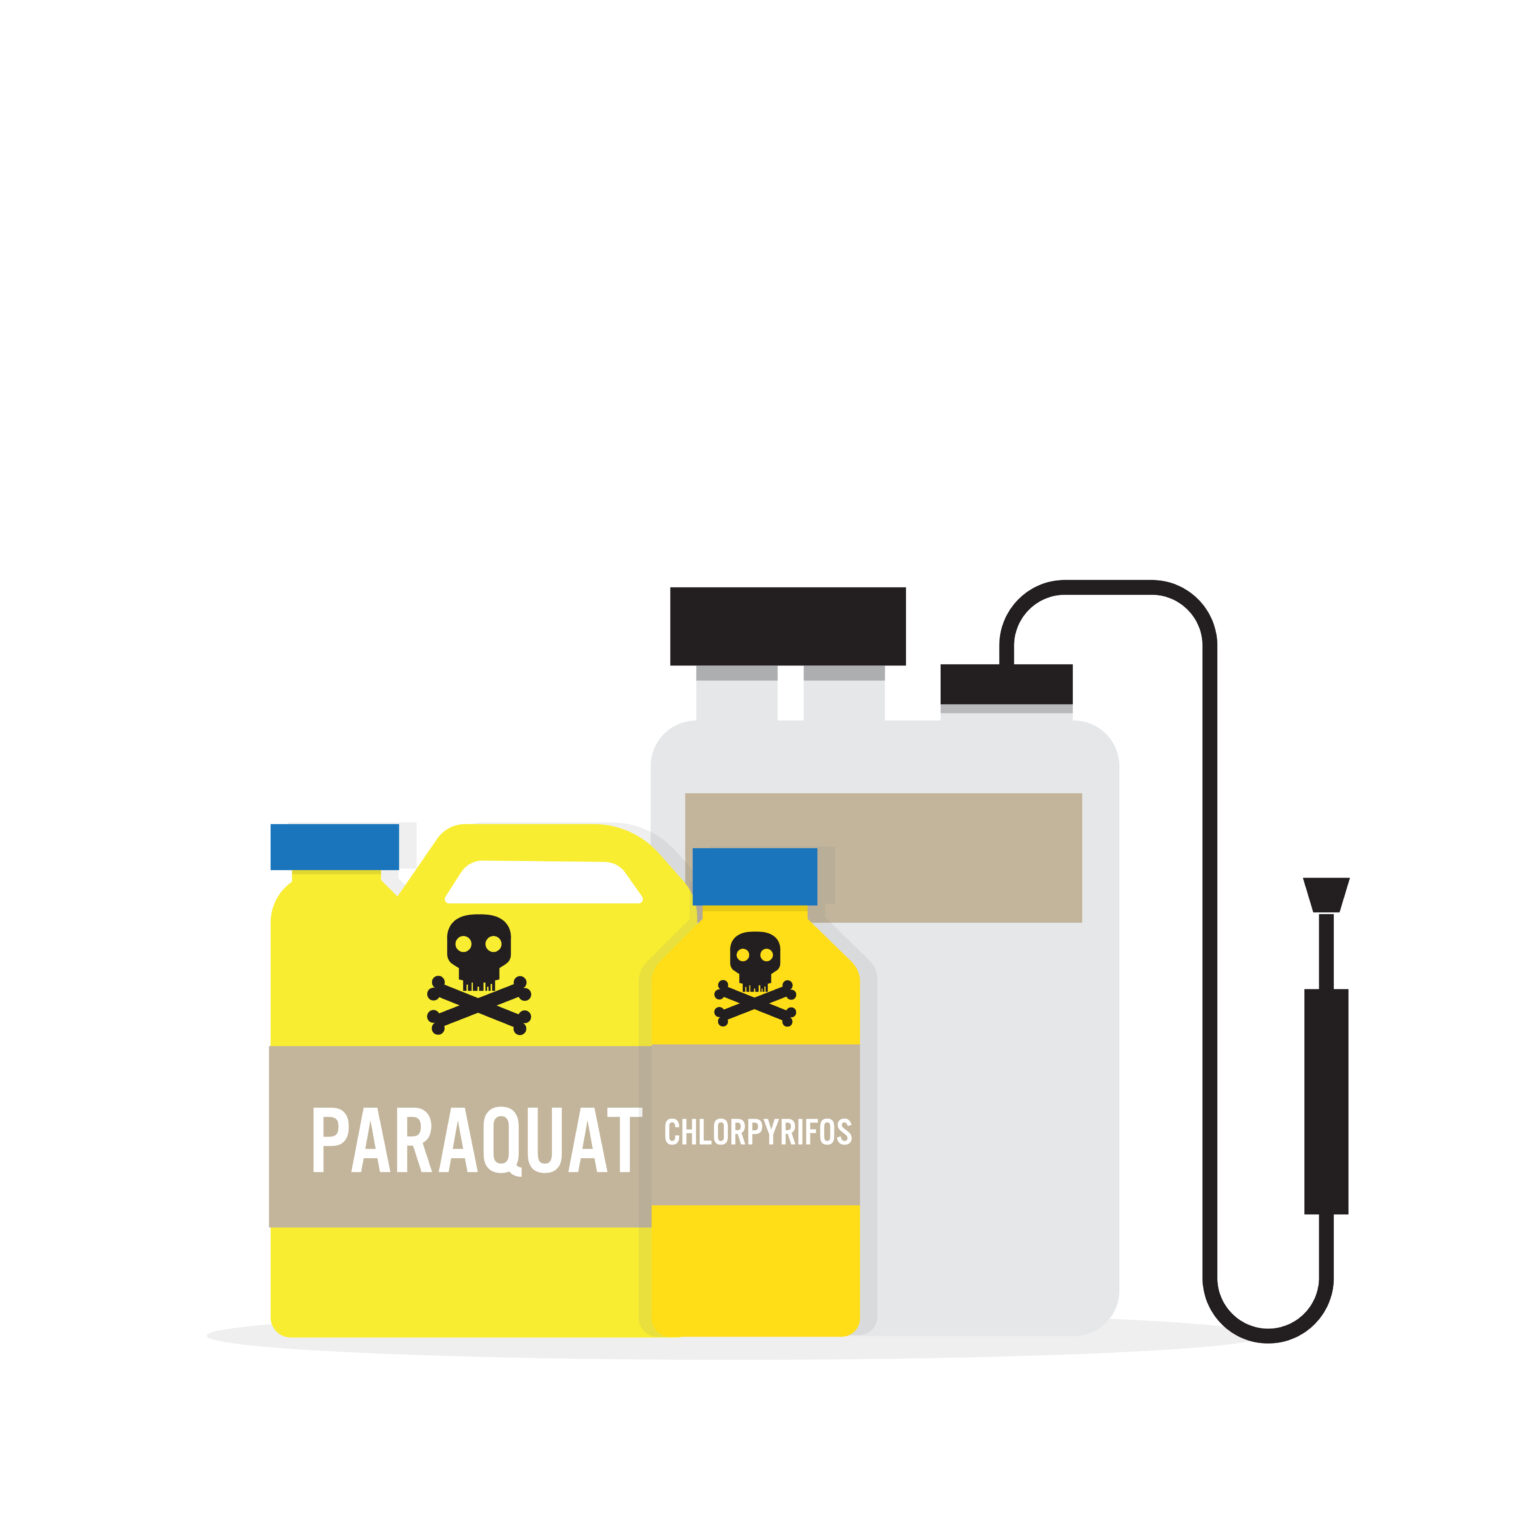 Paraquat Exposure Linked to Parkinson